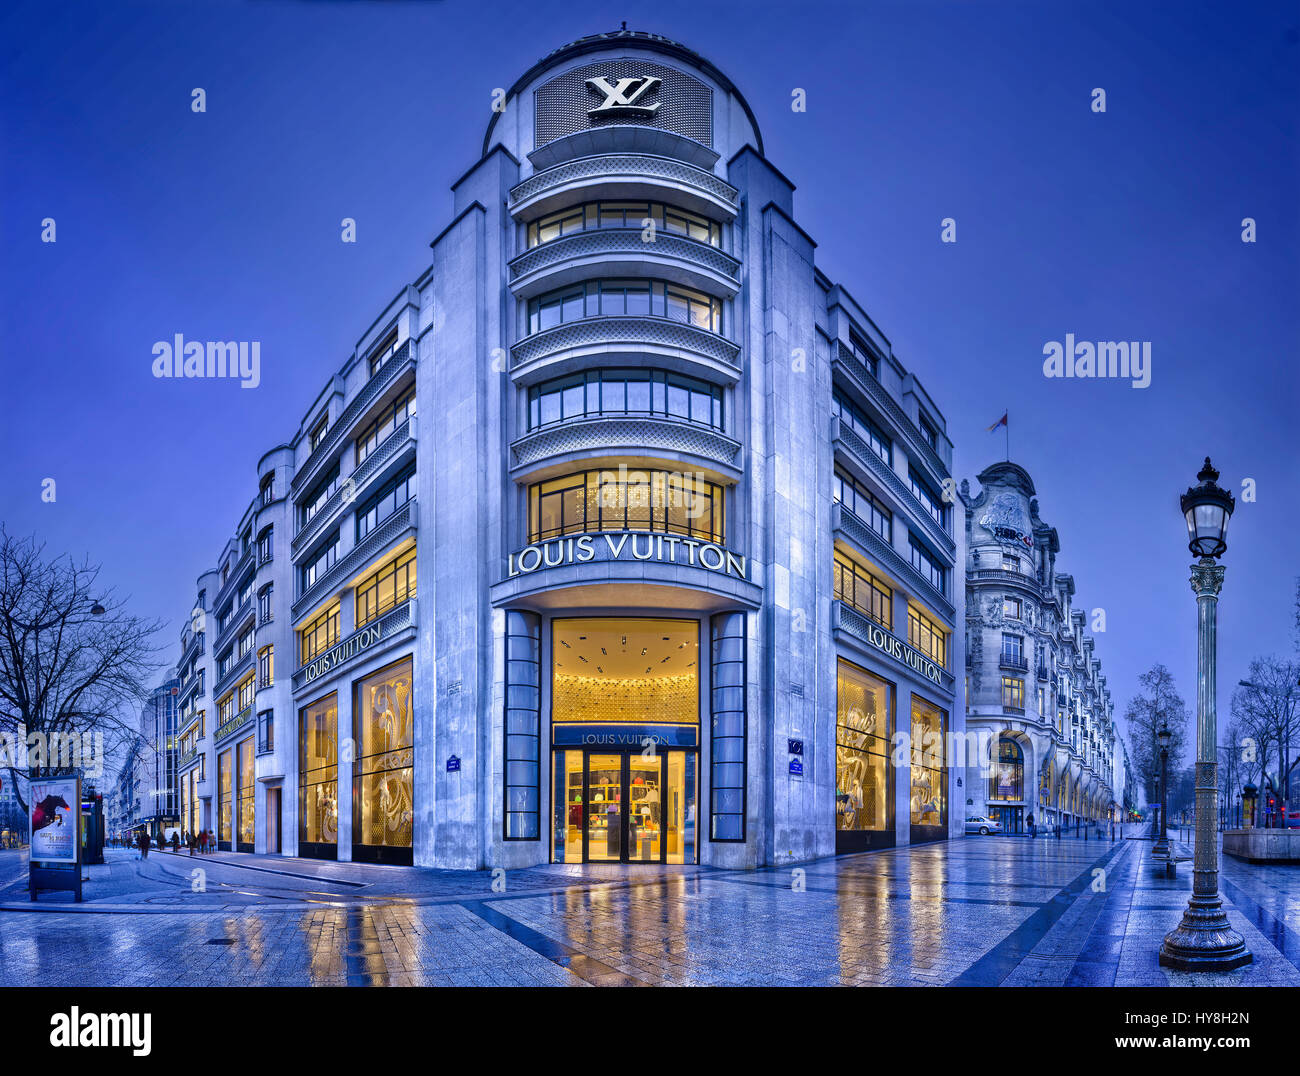 Where Is The Main Louis Vuitton Store In Paris | SEMA Data Co-op